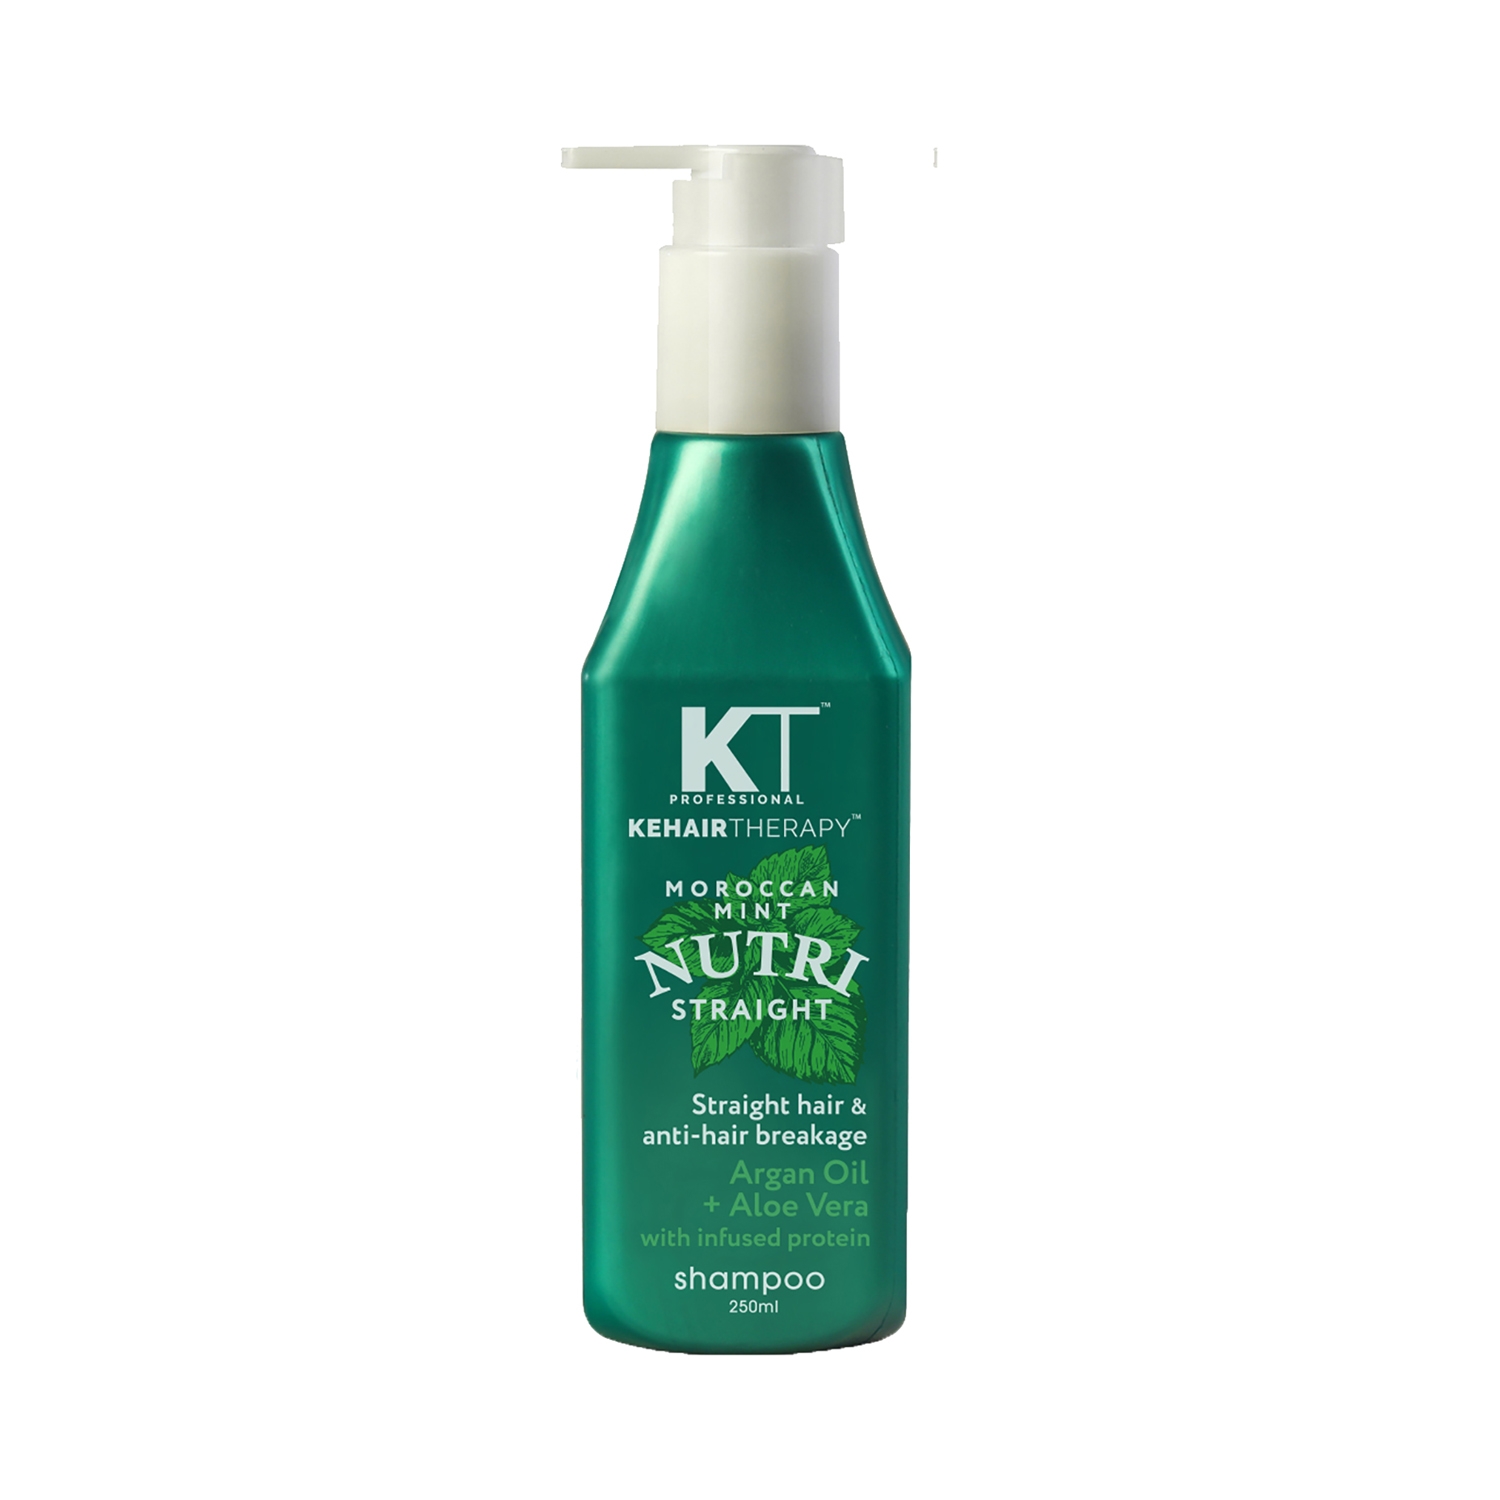 KT Professional | KT Professional Nutri Straight Shampoo (250ml)